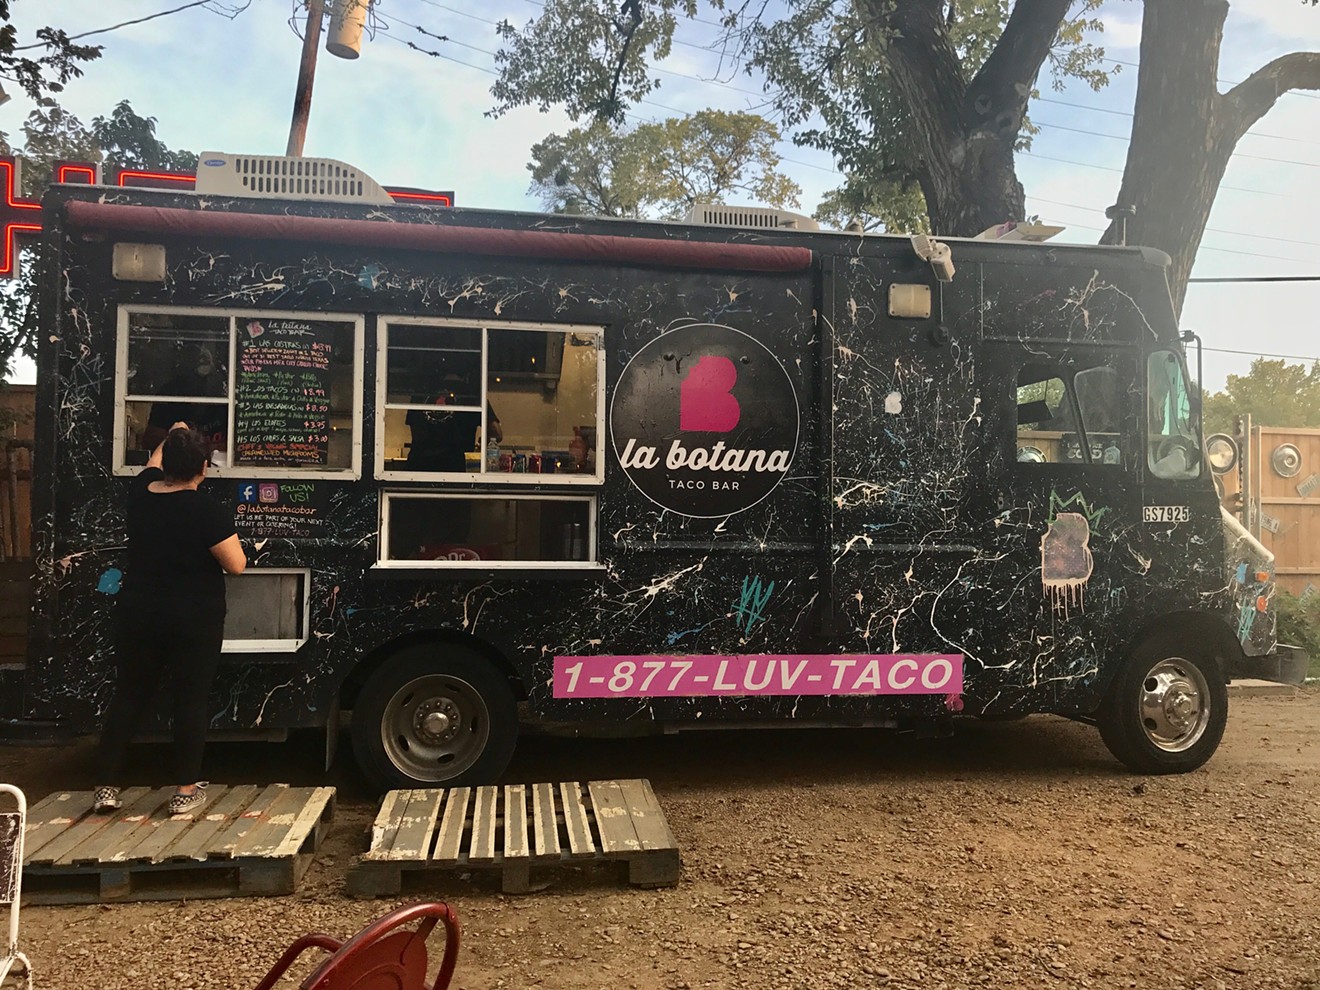 La Botana Taco Bar often serves up stellar tacos at events and places like Sisu and Truck Yard.